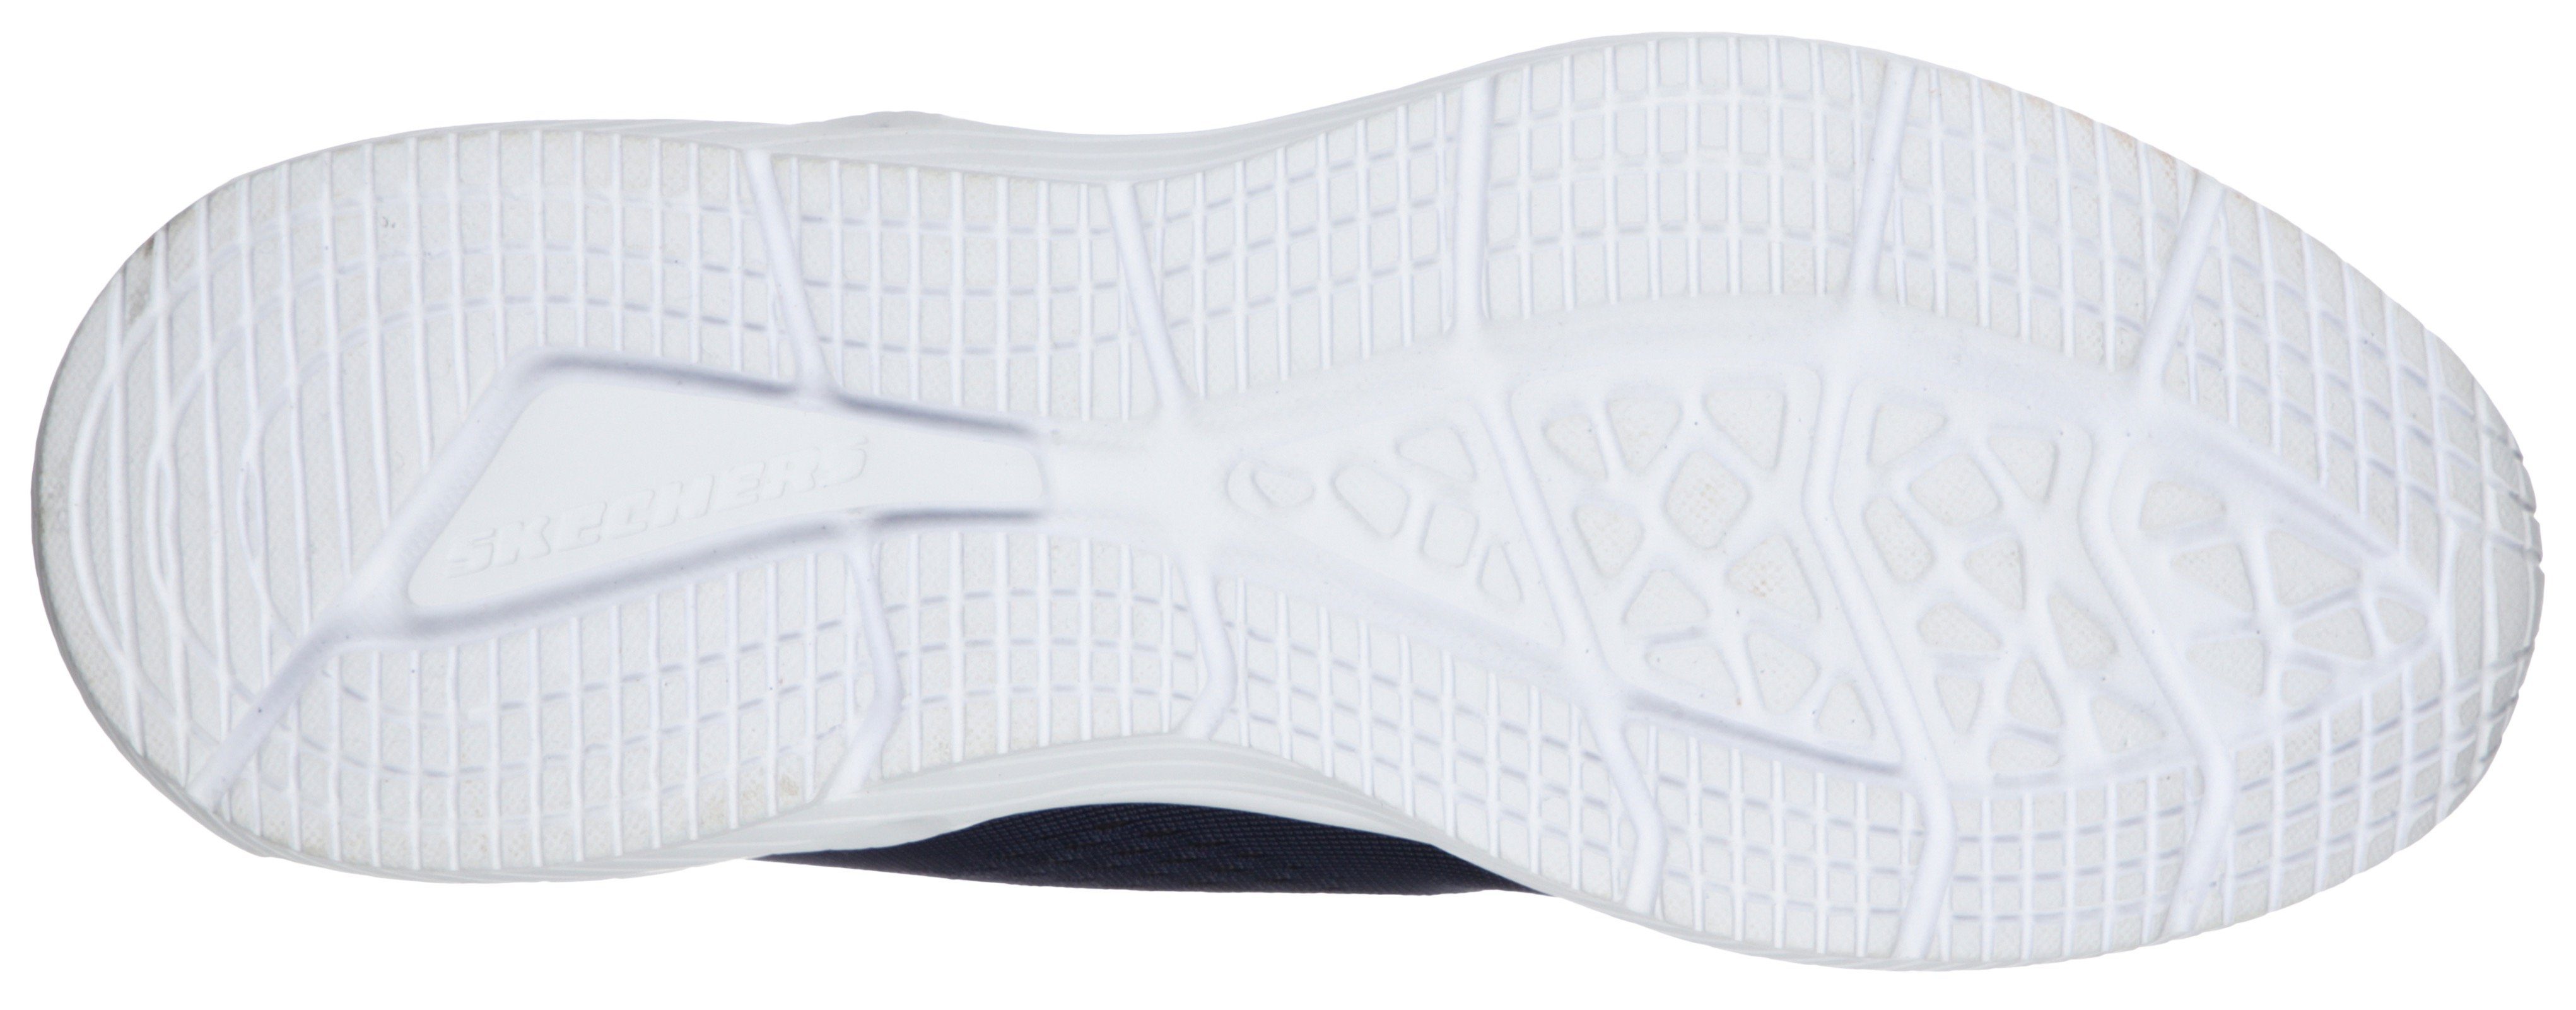 Air-Cooled Skechers Sneaker Air navy mit Memory Foam Dyna